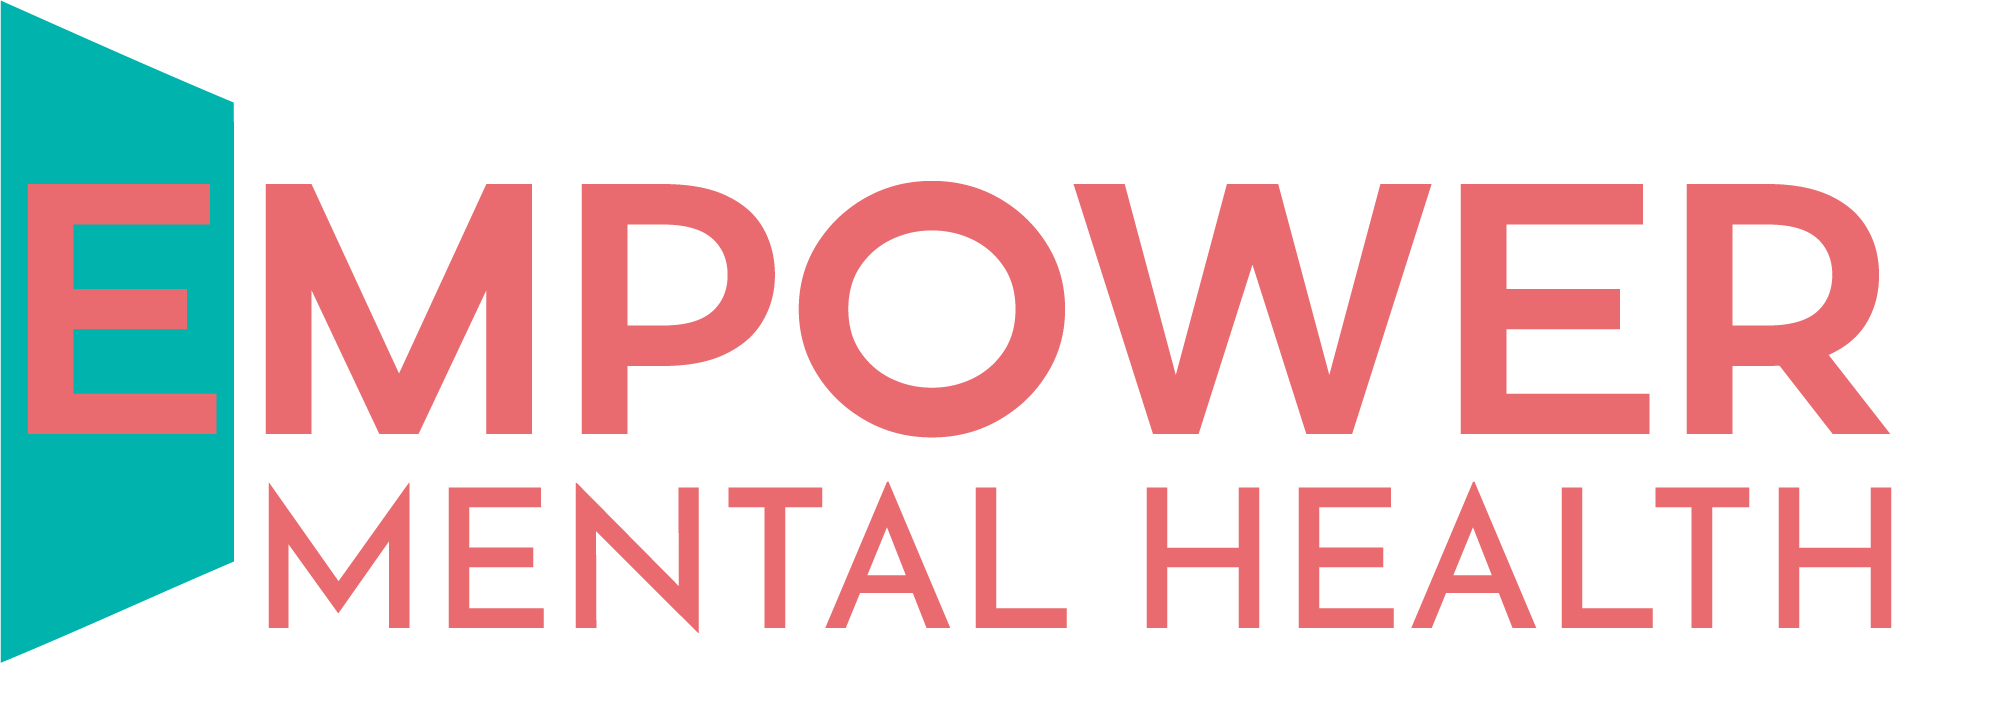 Empower Mental Health logo